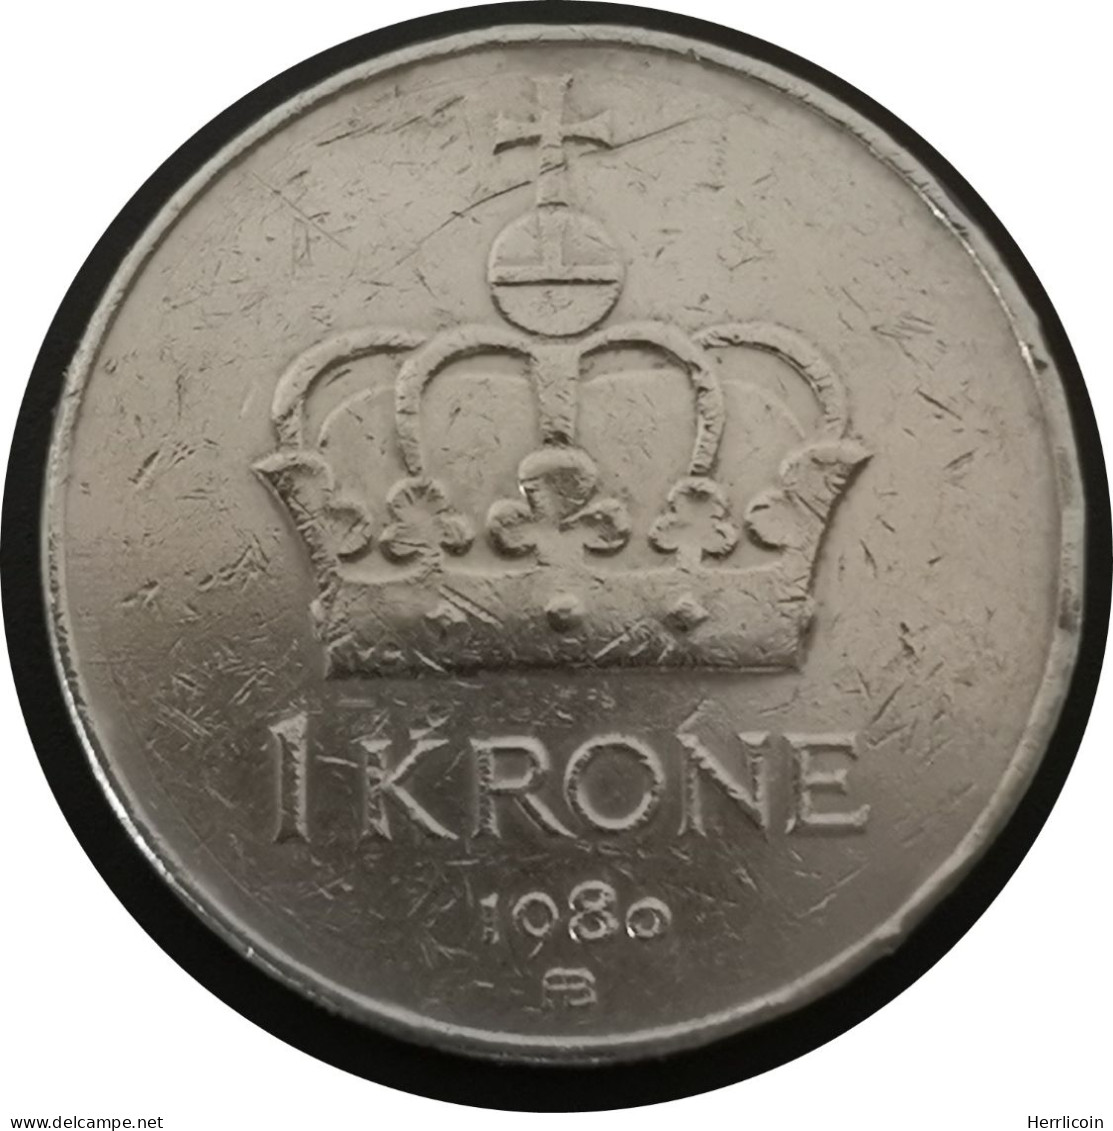 Monnaie Norvège - 1980 - 1 Krone - Olav V - Norvège